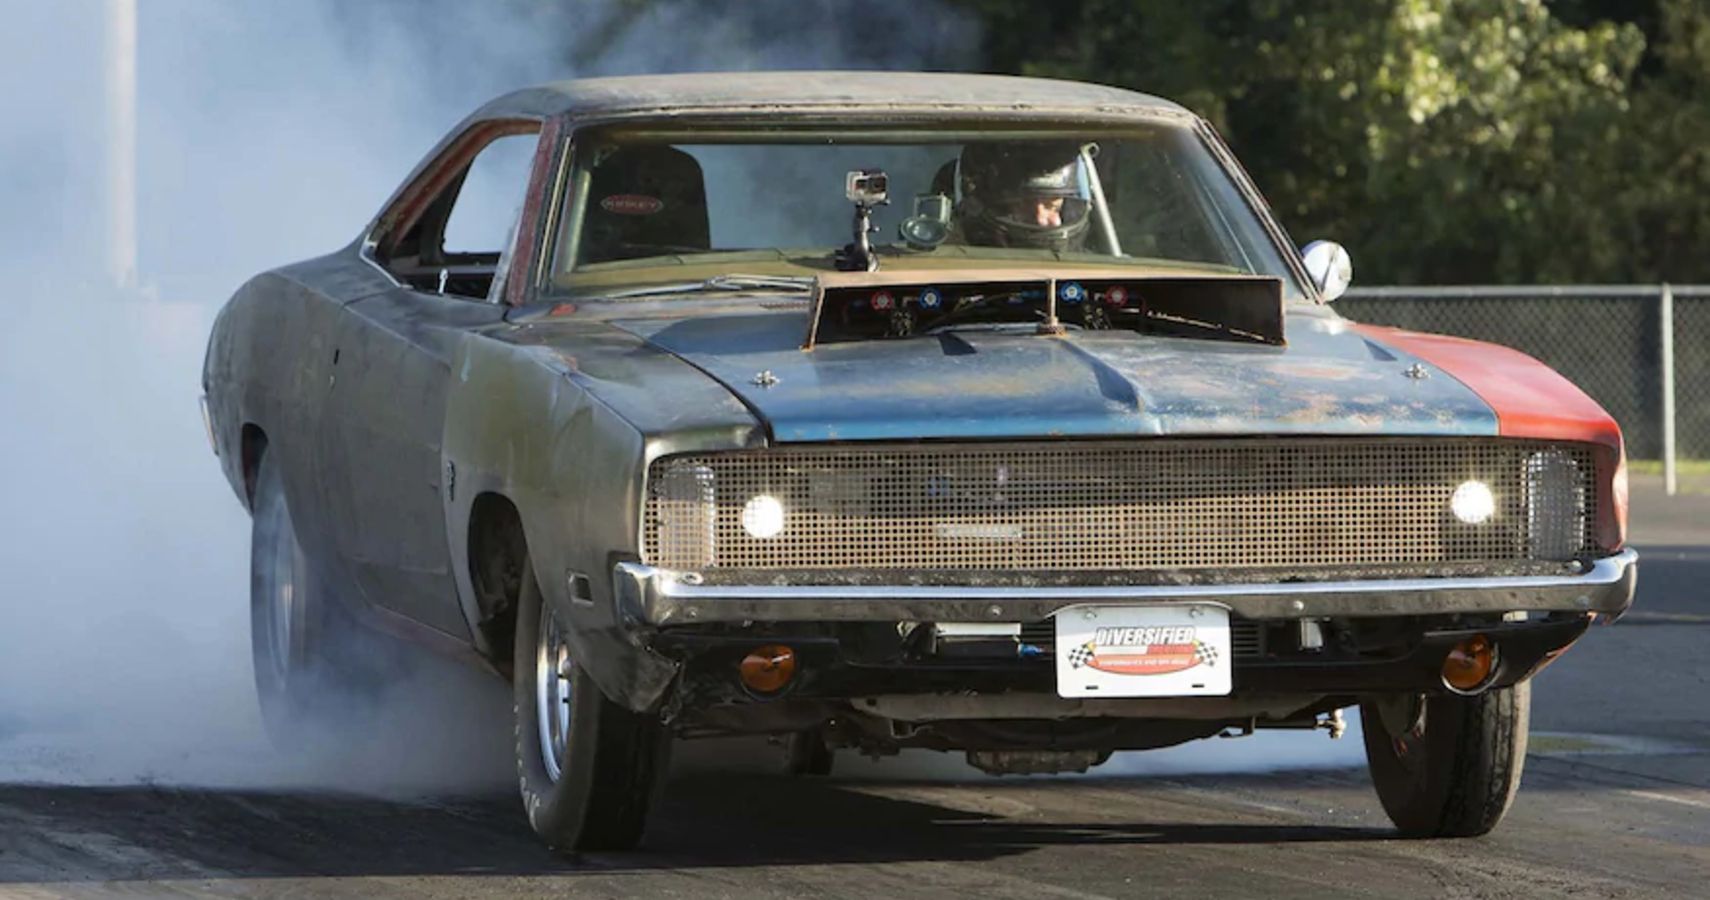 Roadkill Dodge Charger burnout front third quarter view